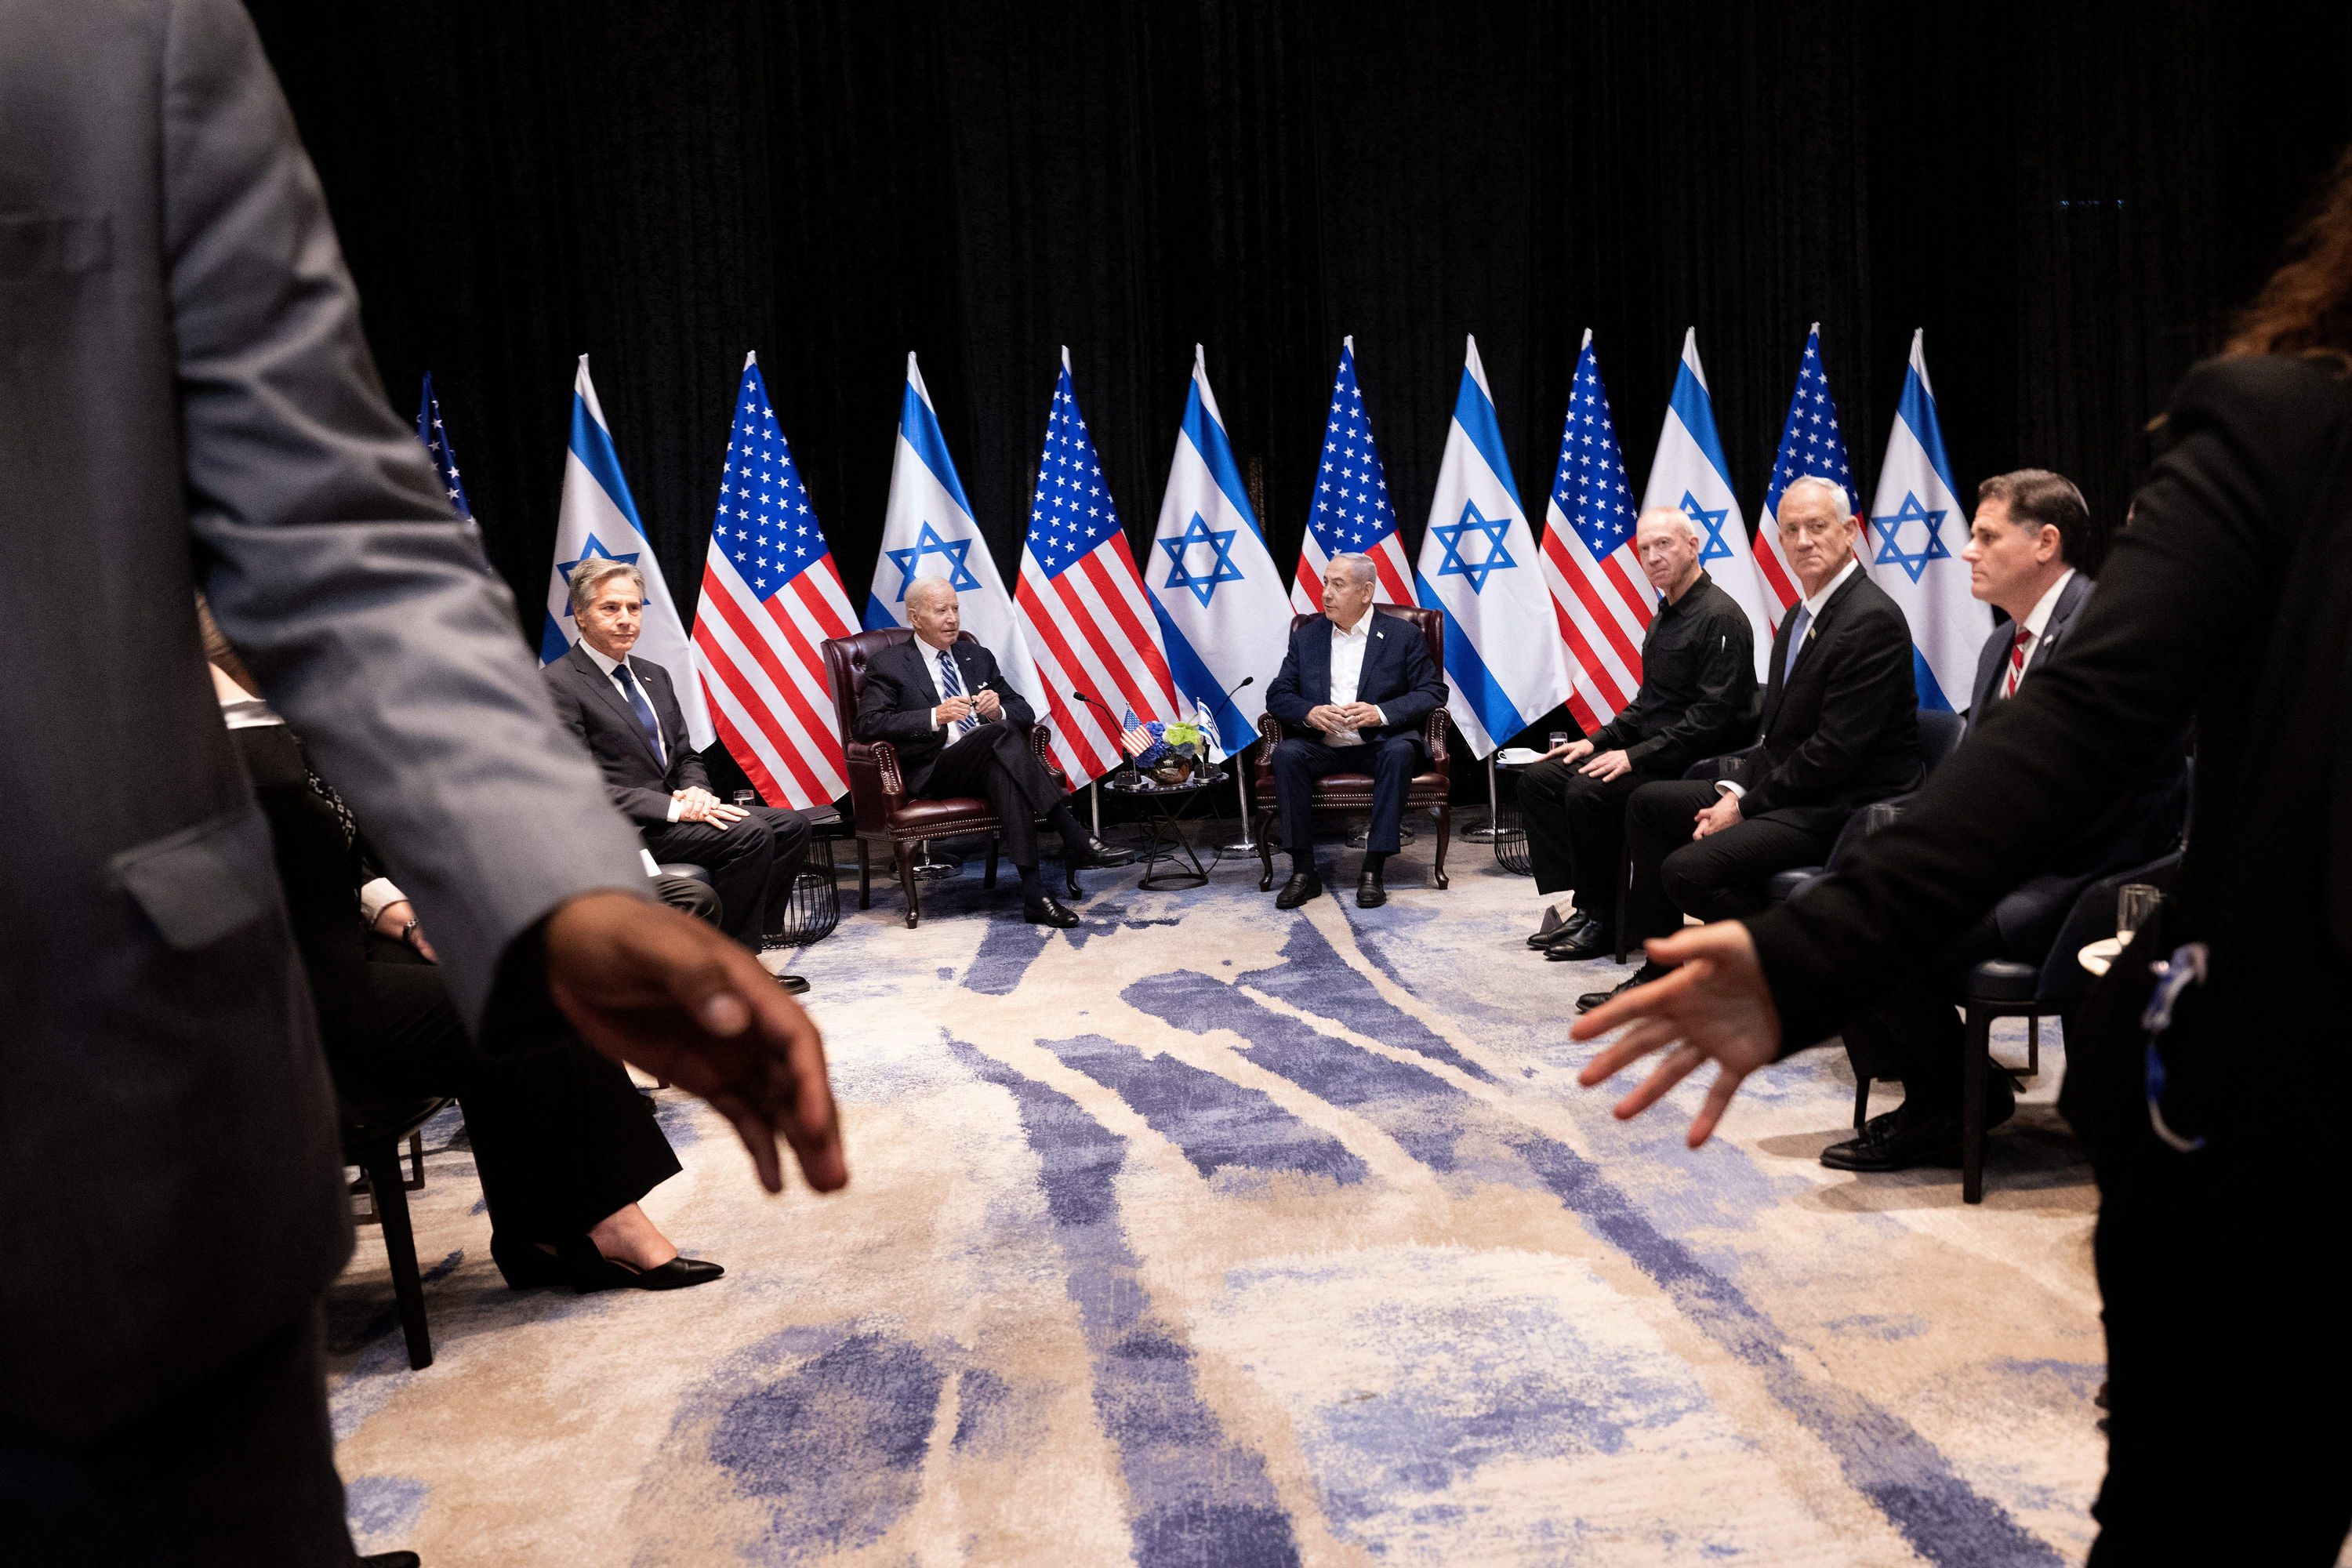 From left, US Secretary of State Antony Blinken and US President Joe Biden join Israel's Prime Minister Benjamin Netanyahu and other Israeli officials as they wait for the start of the Israeli war cabinet meeting in Tel Aviv on October 18.